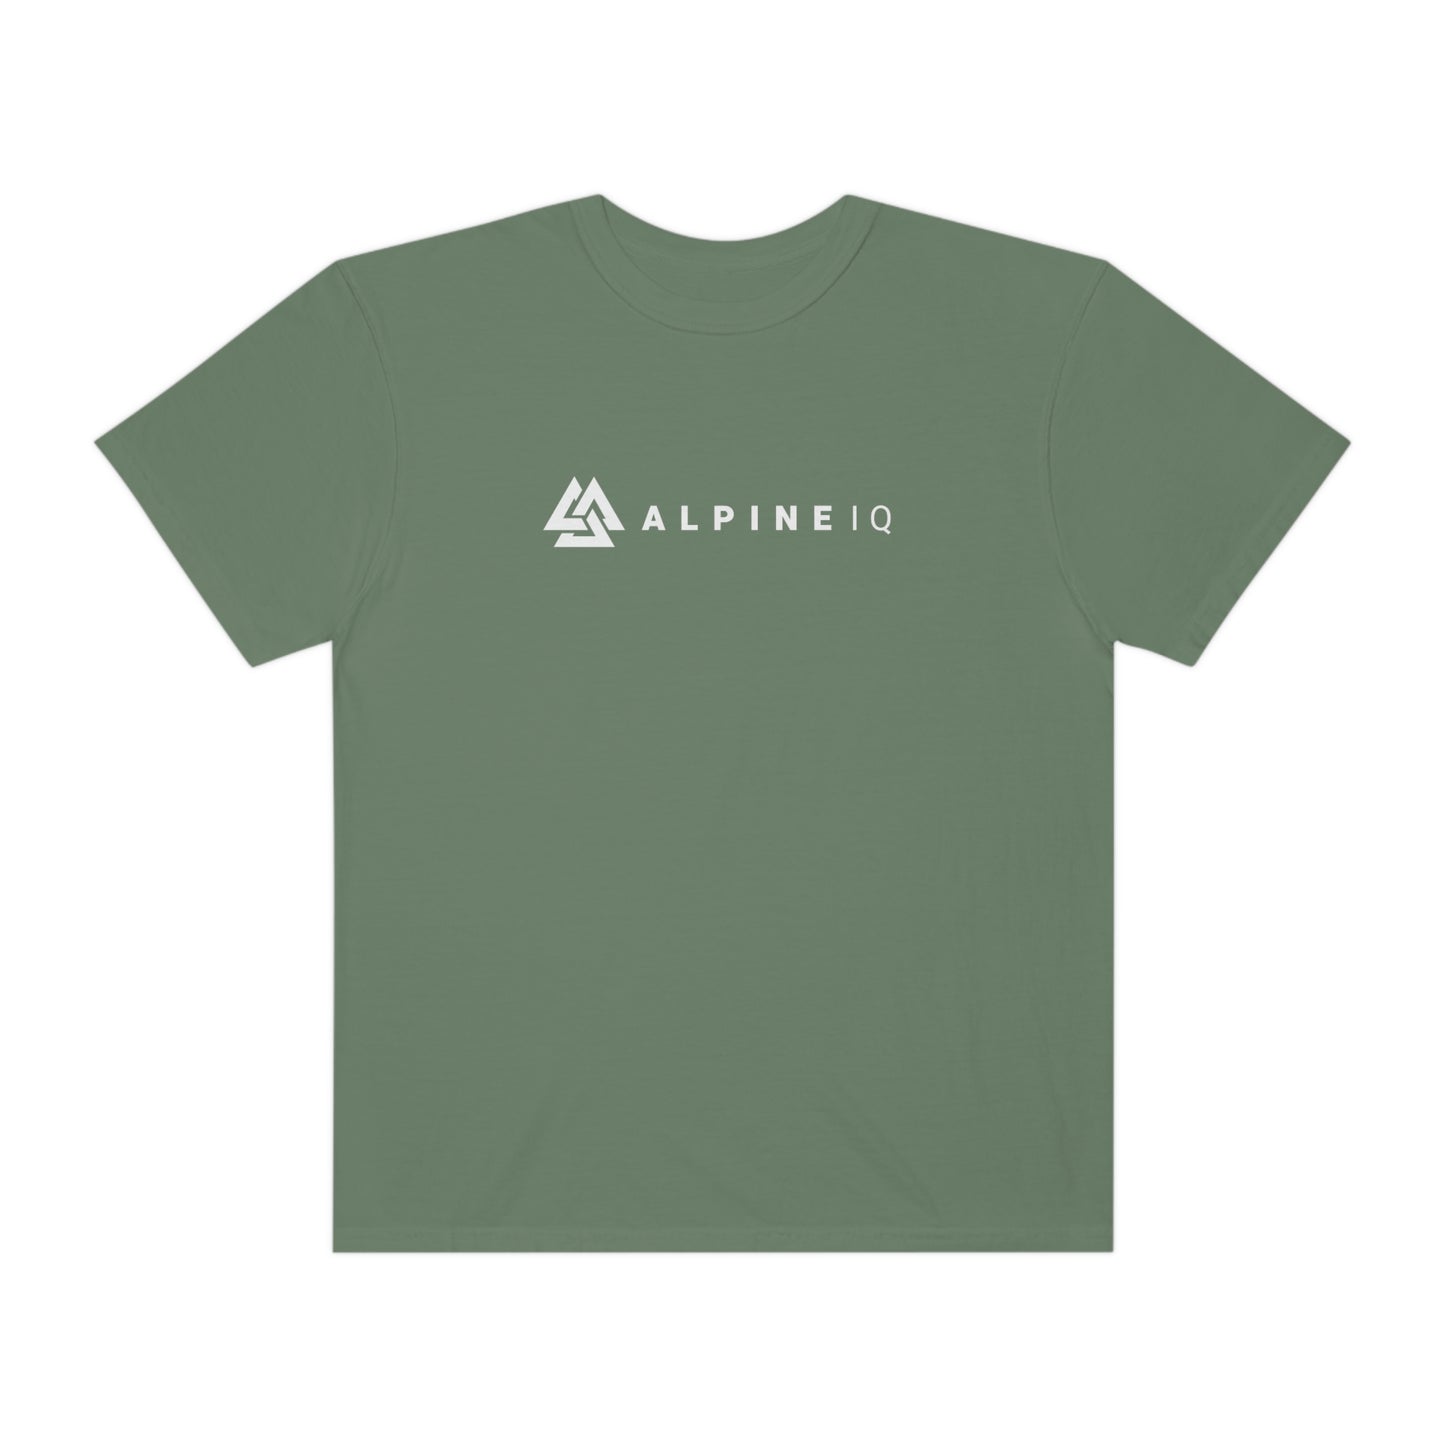 Classic Alpine IQ Short Sleeve T-Shirt - Heavy weight shirt